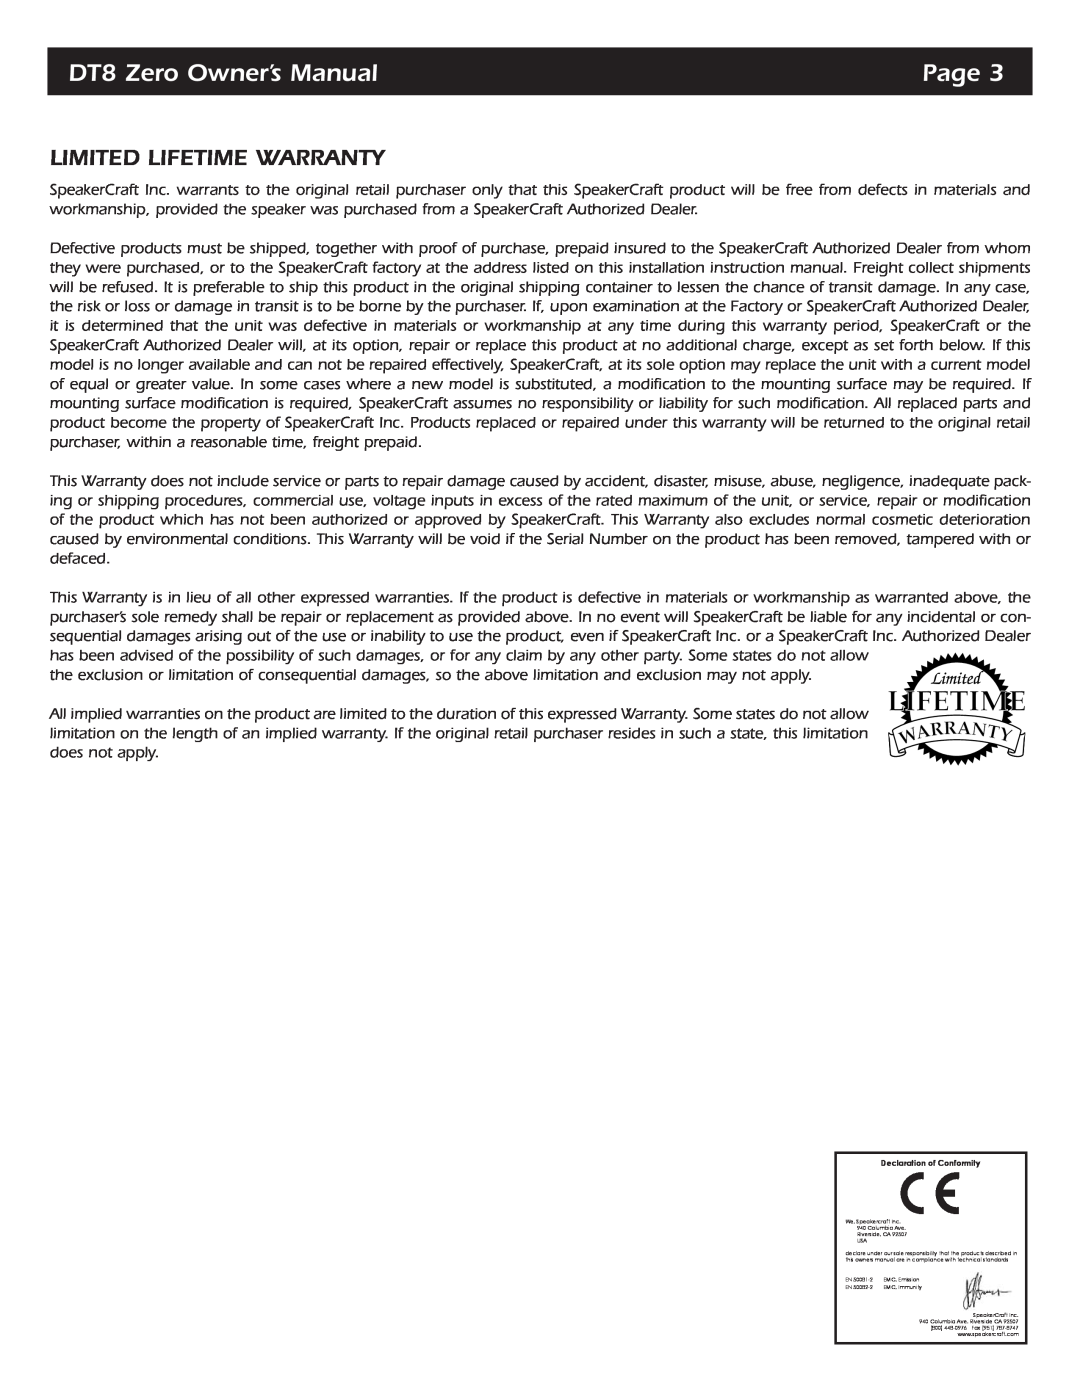 SpeakerCraft DT8 ZERO specifications Limited Lifetime Warranty, Page, Declaration of Conformity 